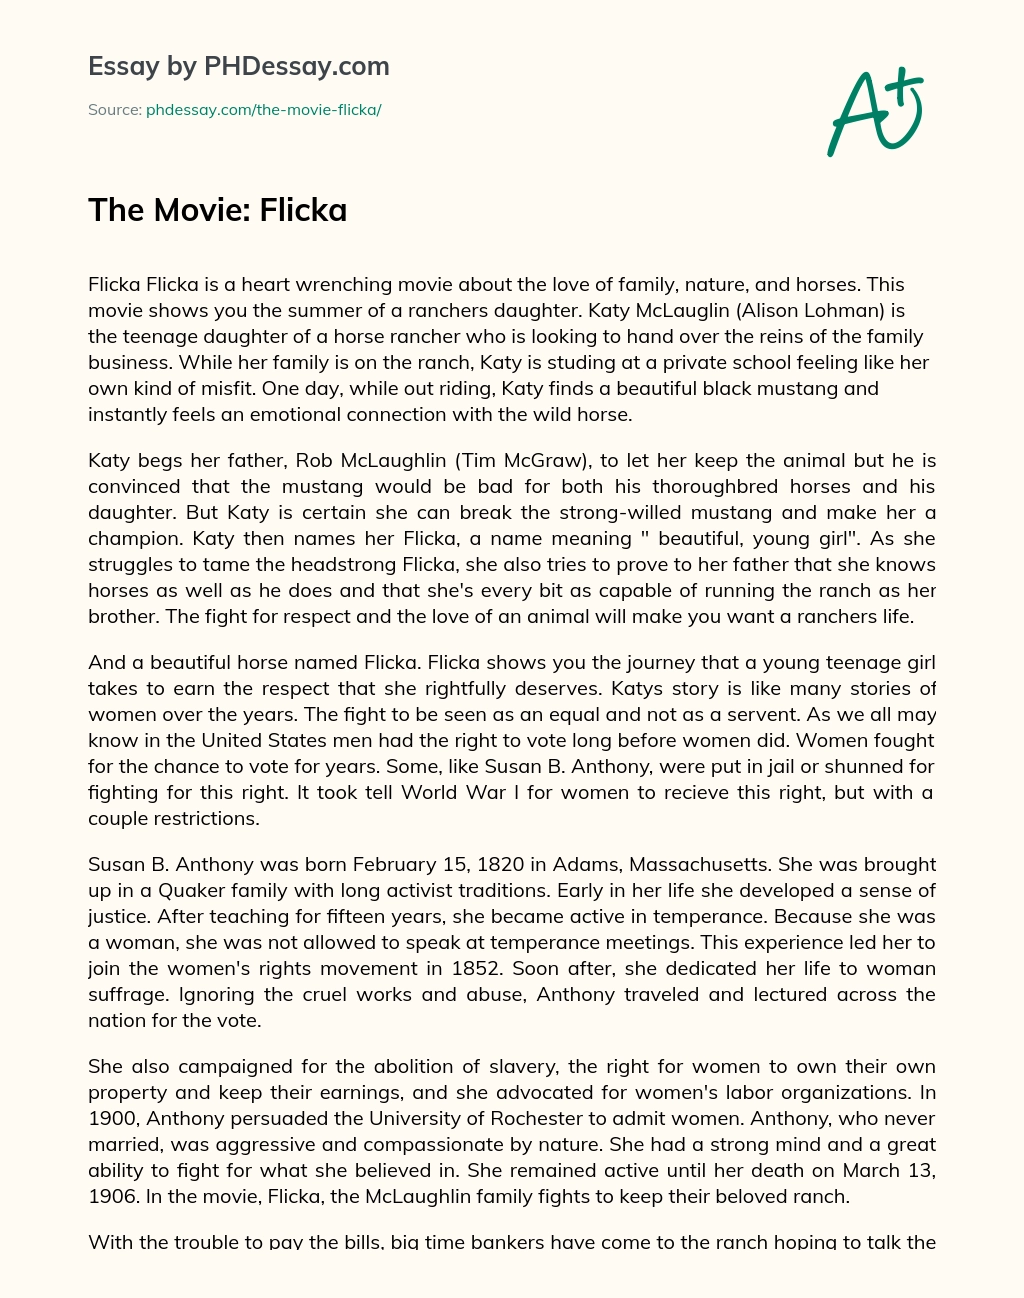 The Movie: Flicka essay